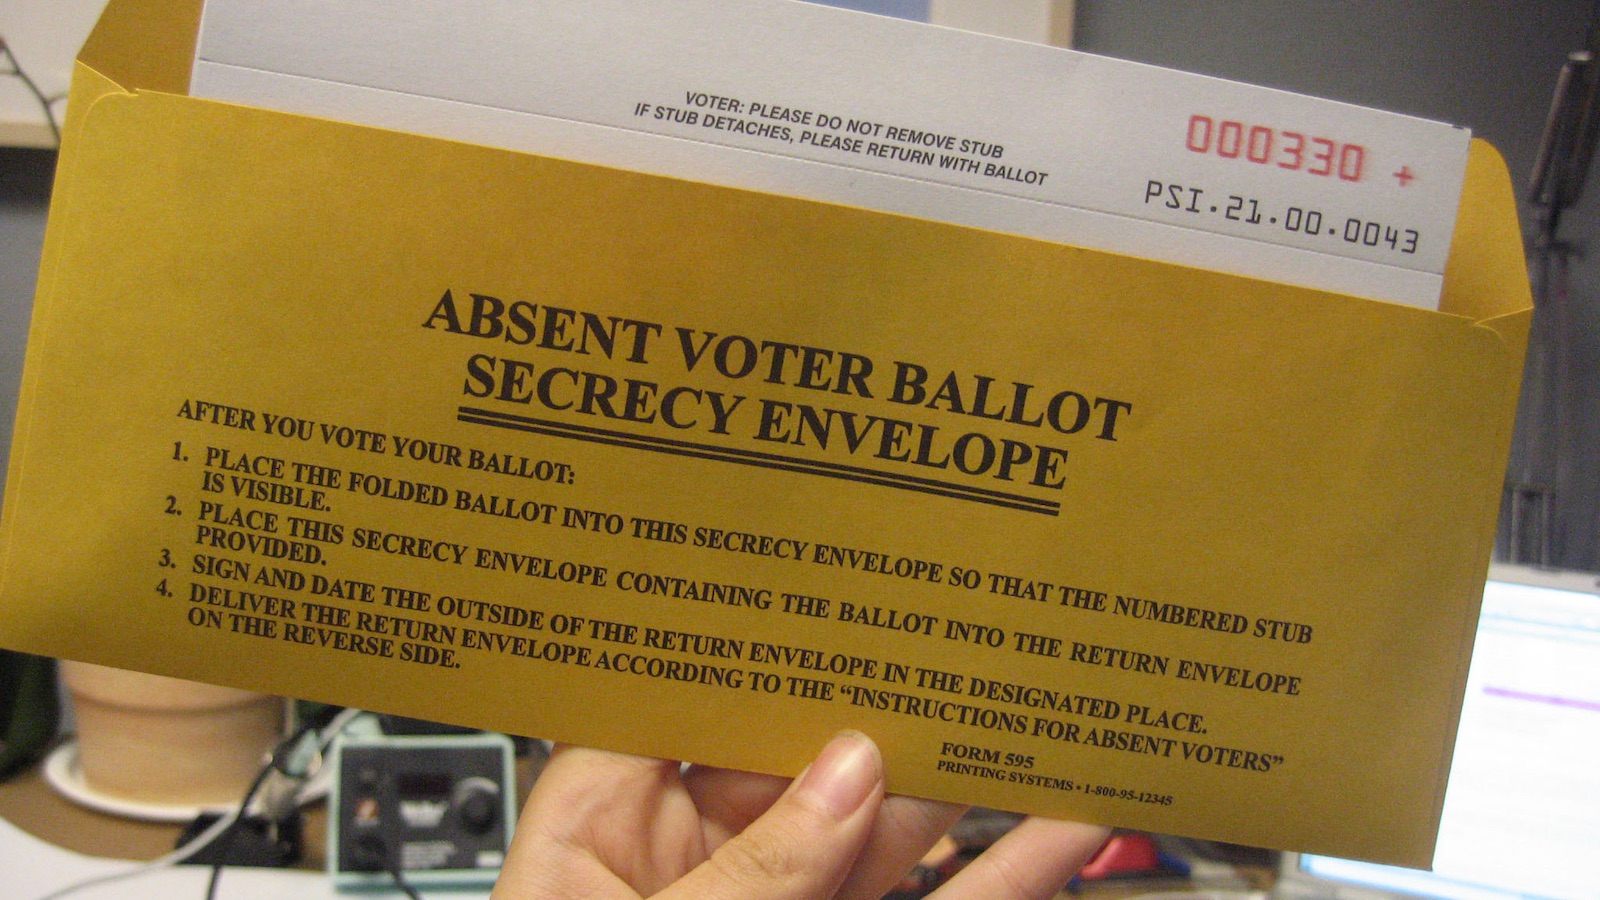 An absentee voter ballot secrecy envelope